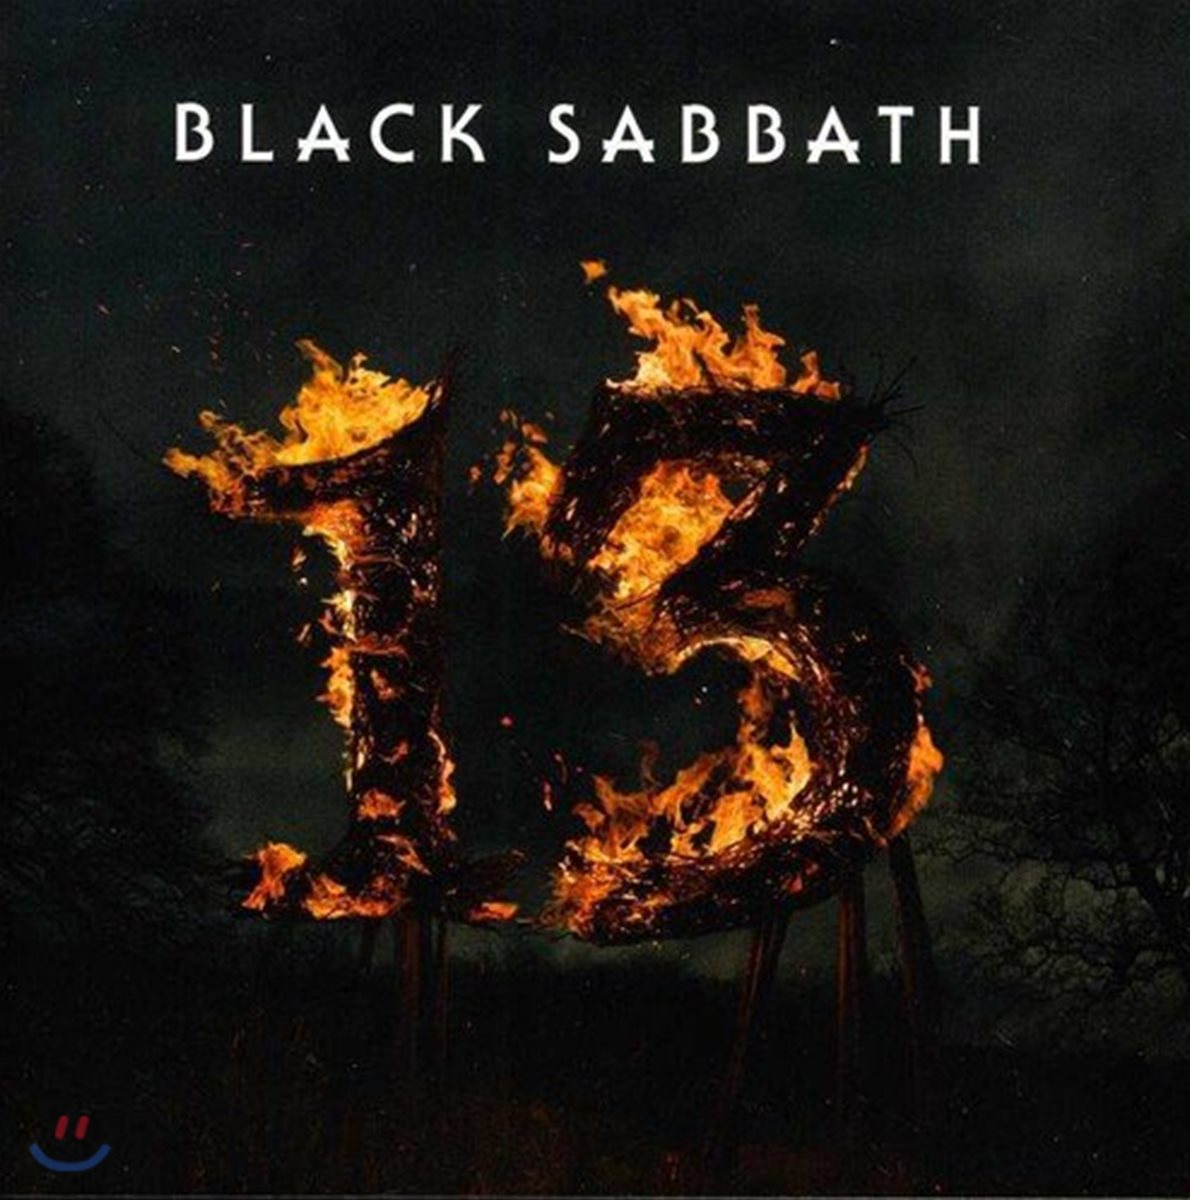 Black Sabbath - 13 블랙 사바스 정규 19집 [오렌지 컬러 2LP]